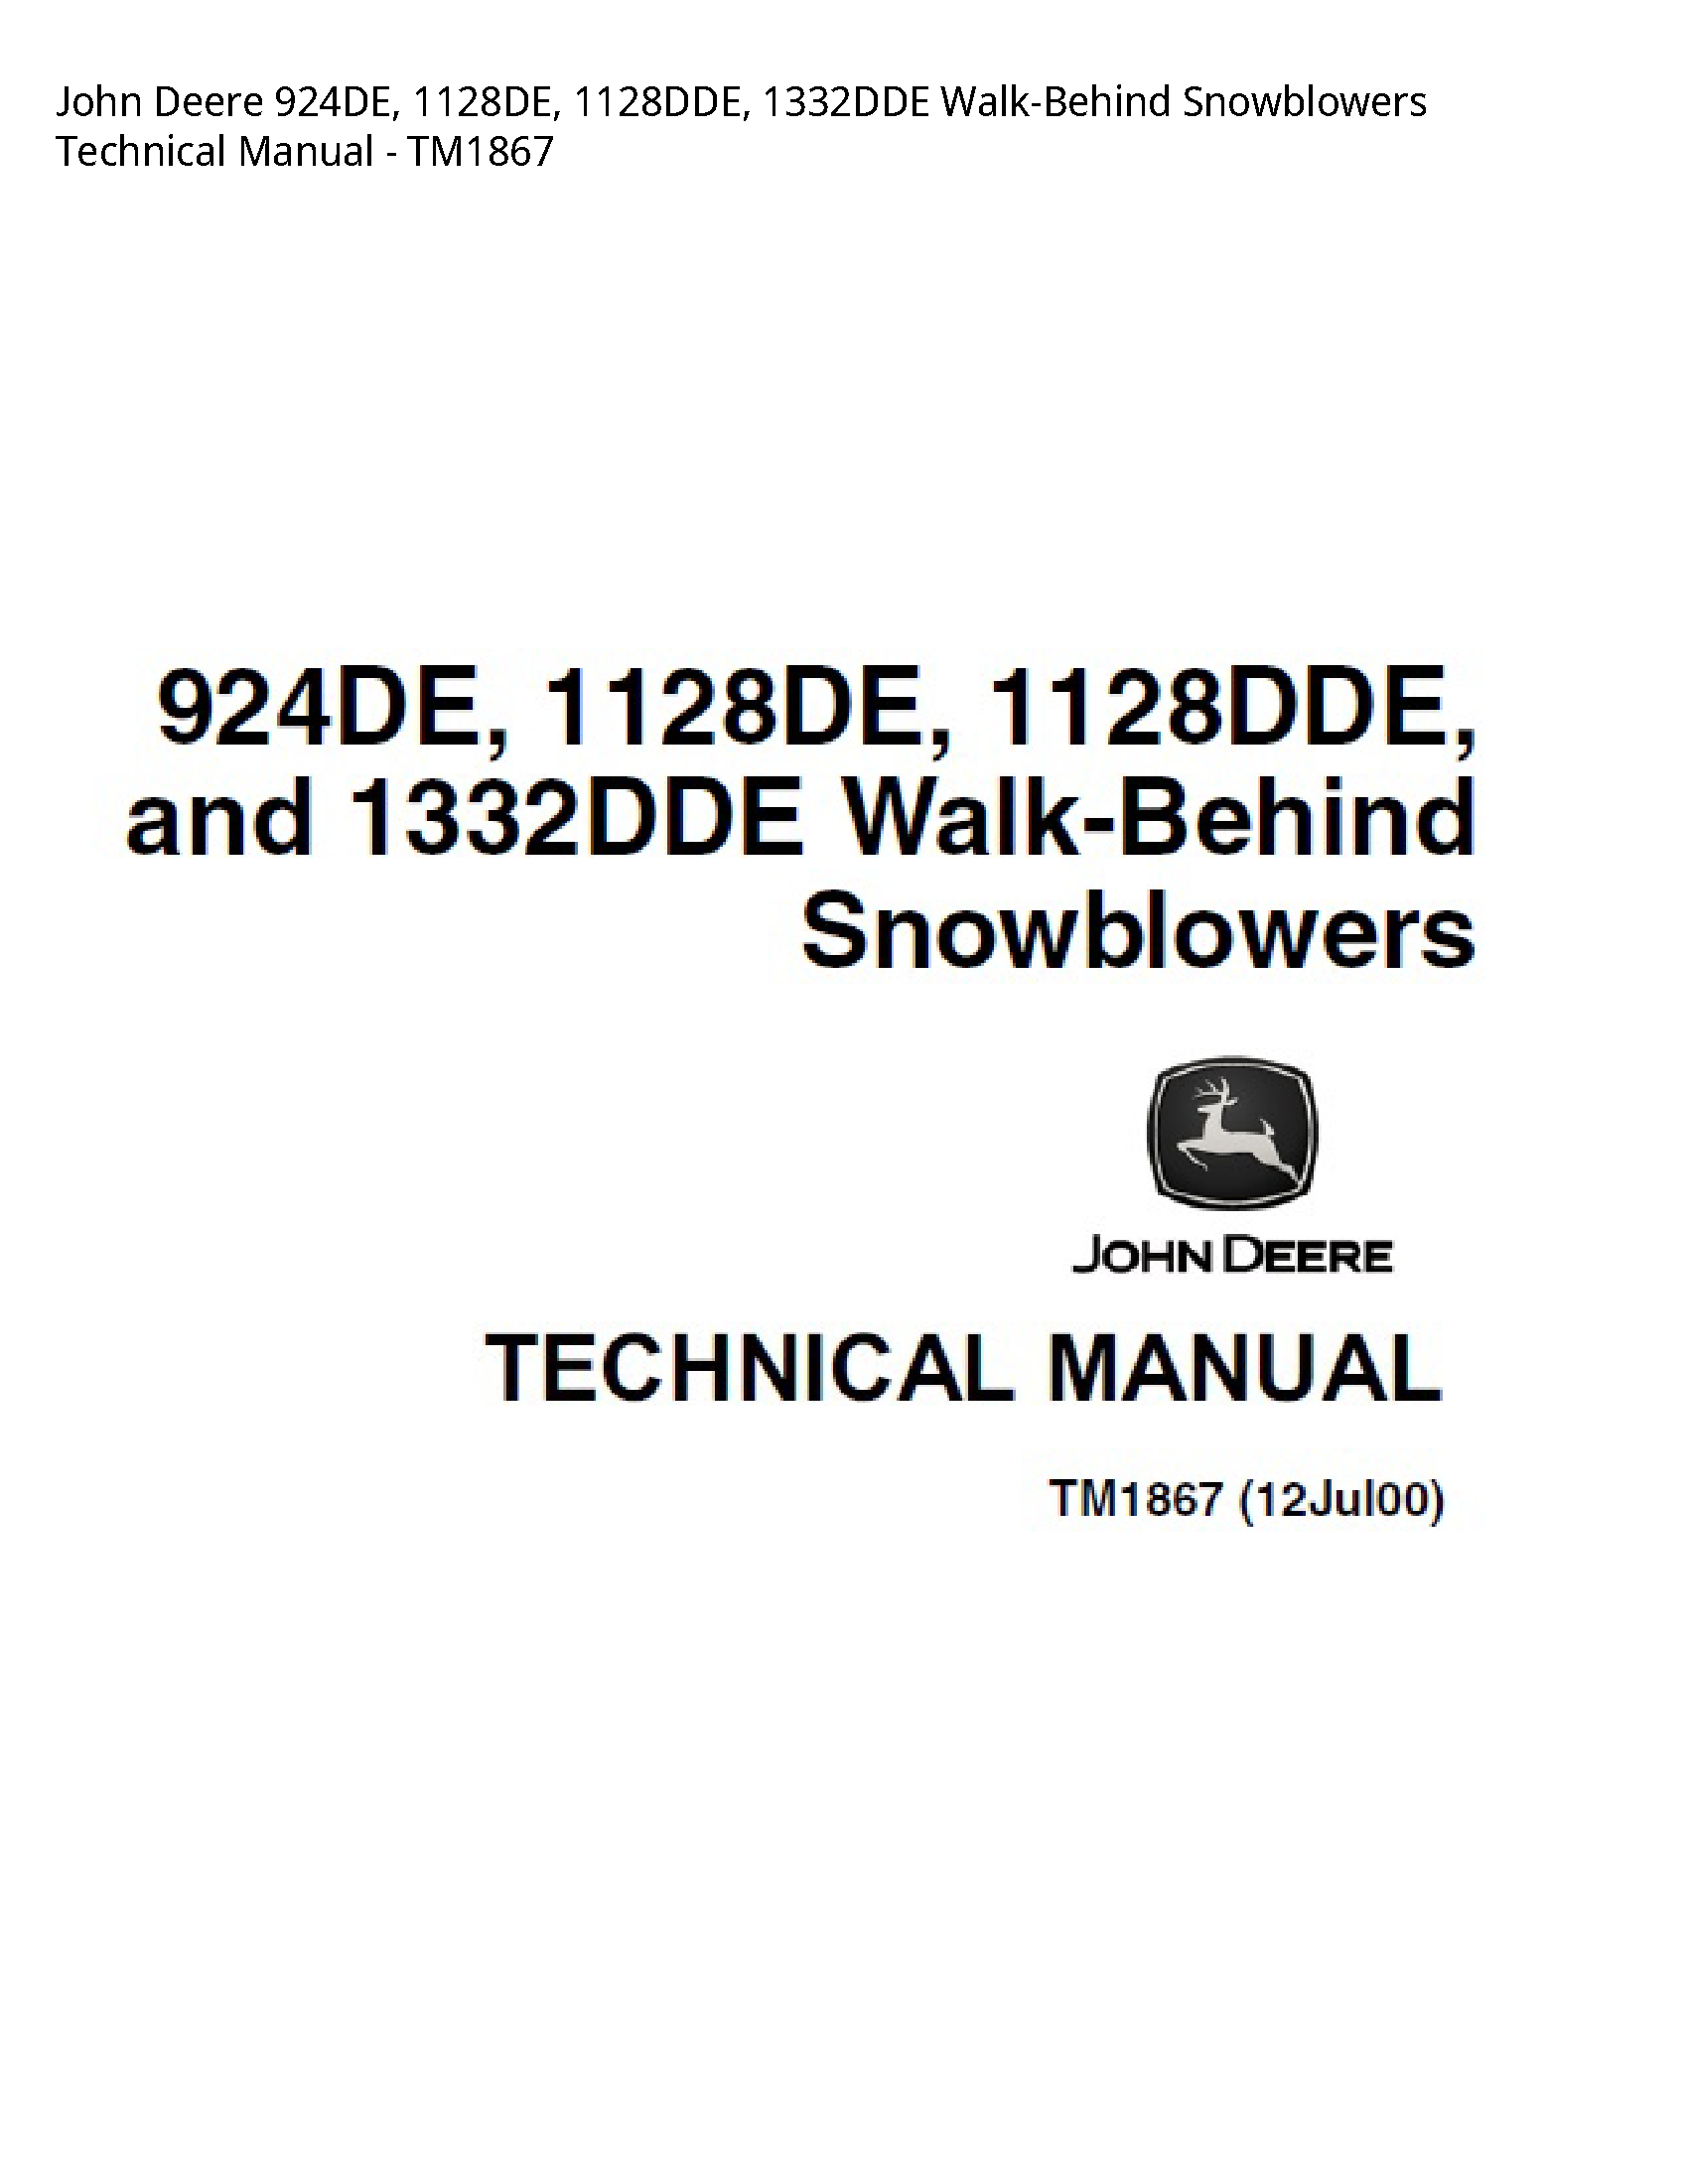 John Deere 924DE Walk-Behind Snowblowers Technical manual